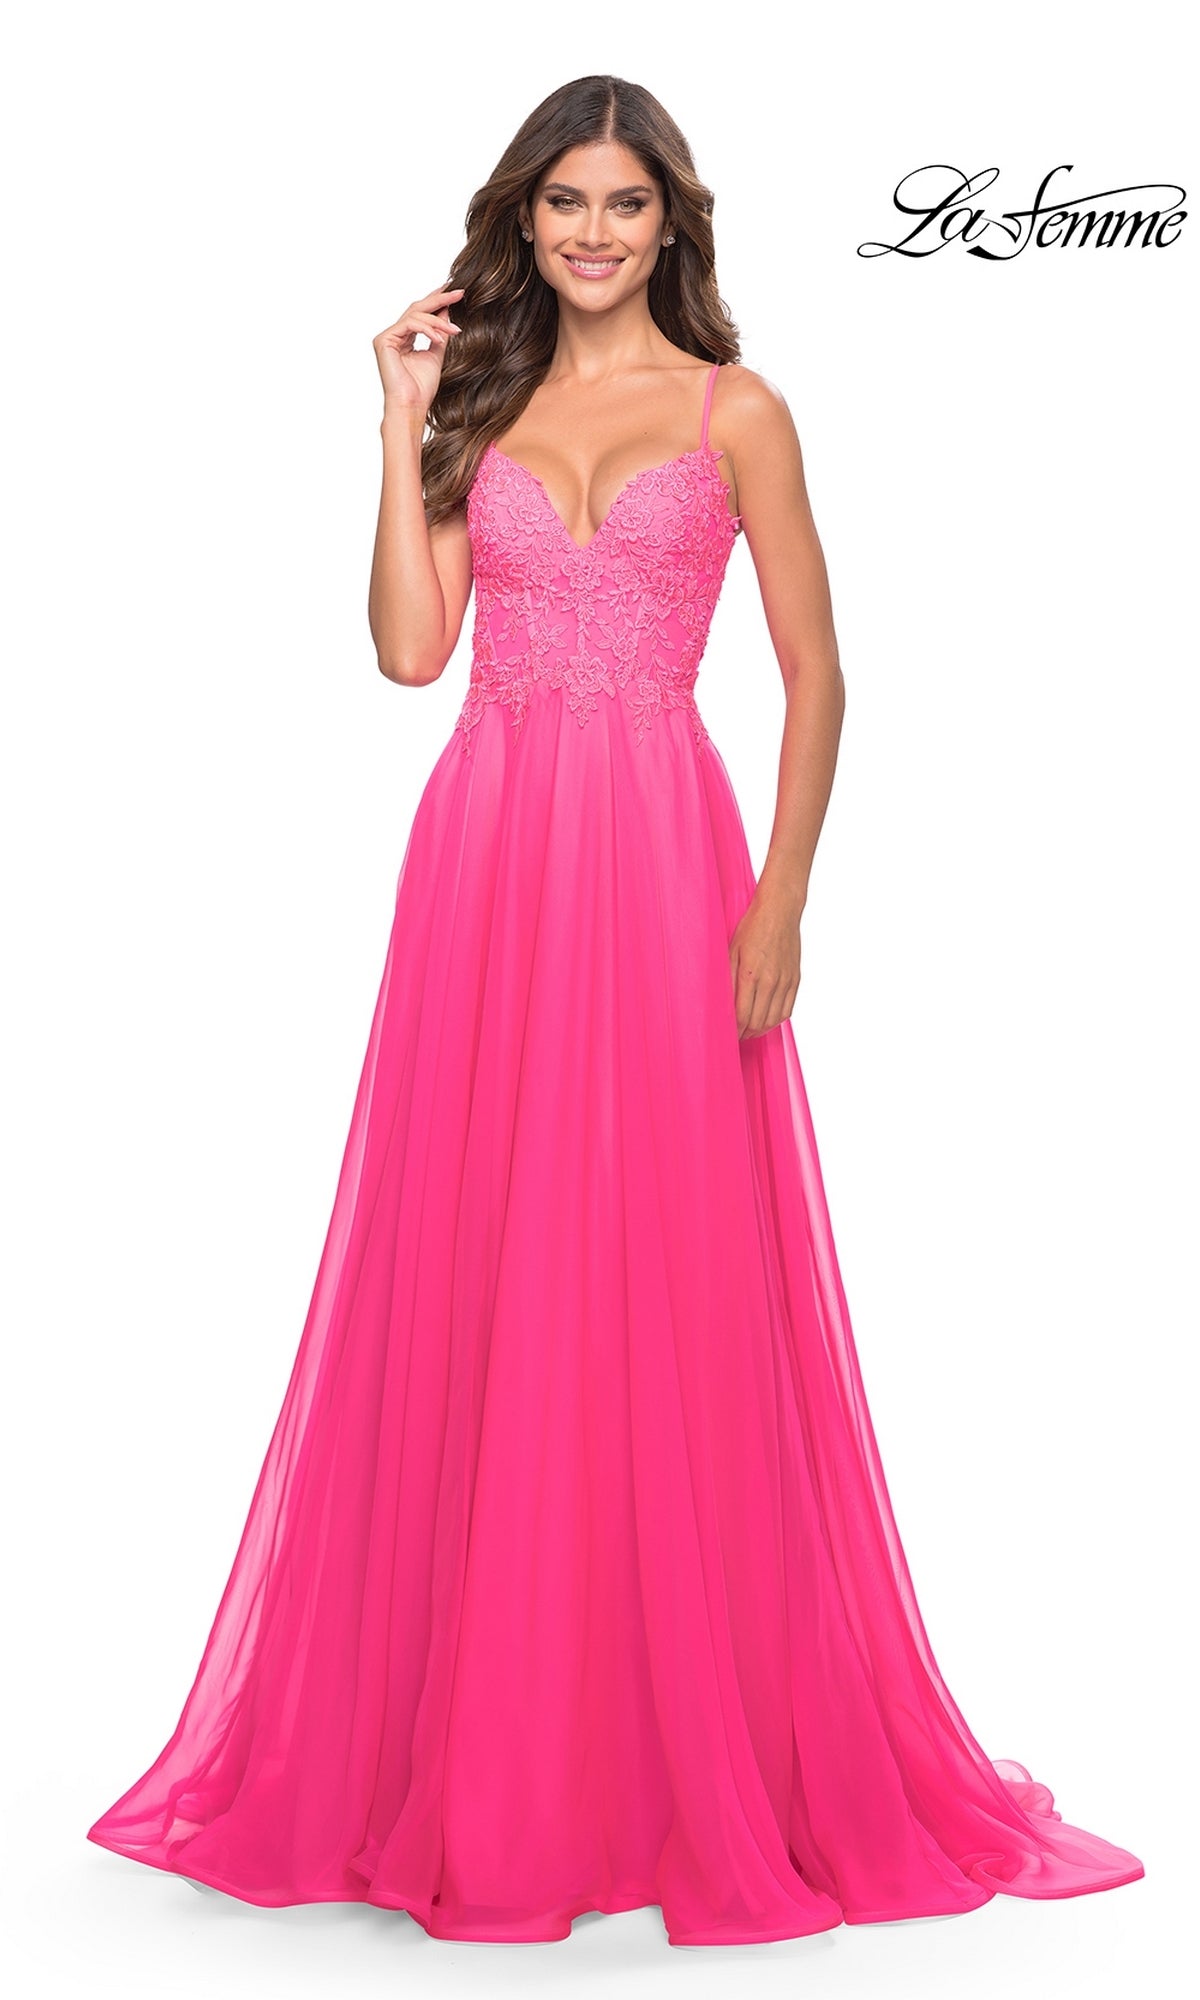  La Femme 31506 Formal Prom Dress